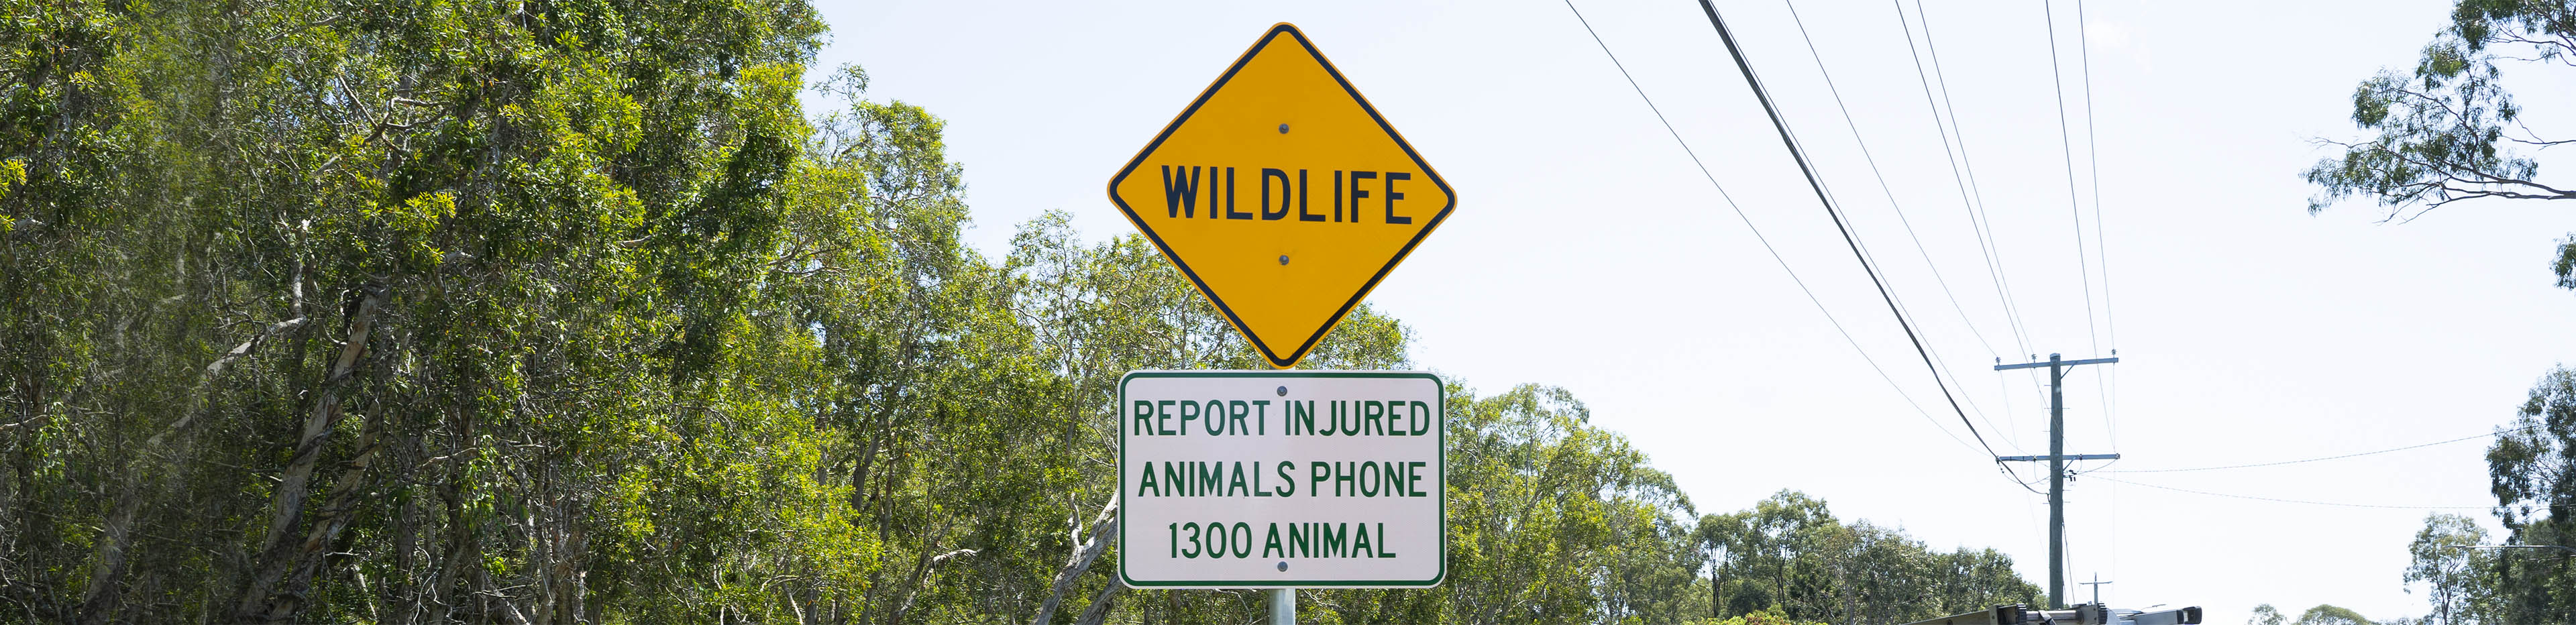 wildlife sign with 1300ANIMAL number beneath it